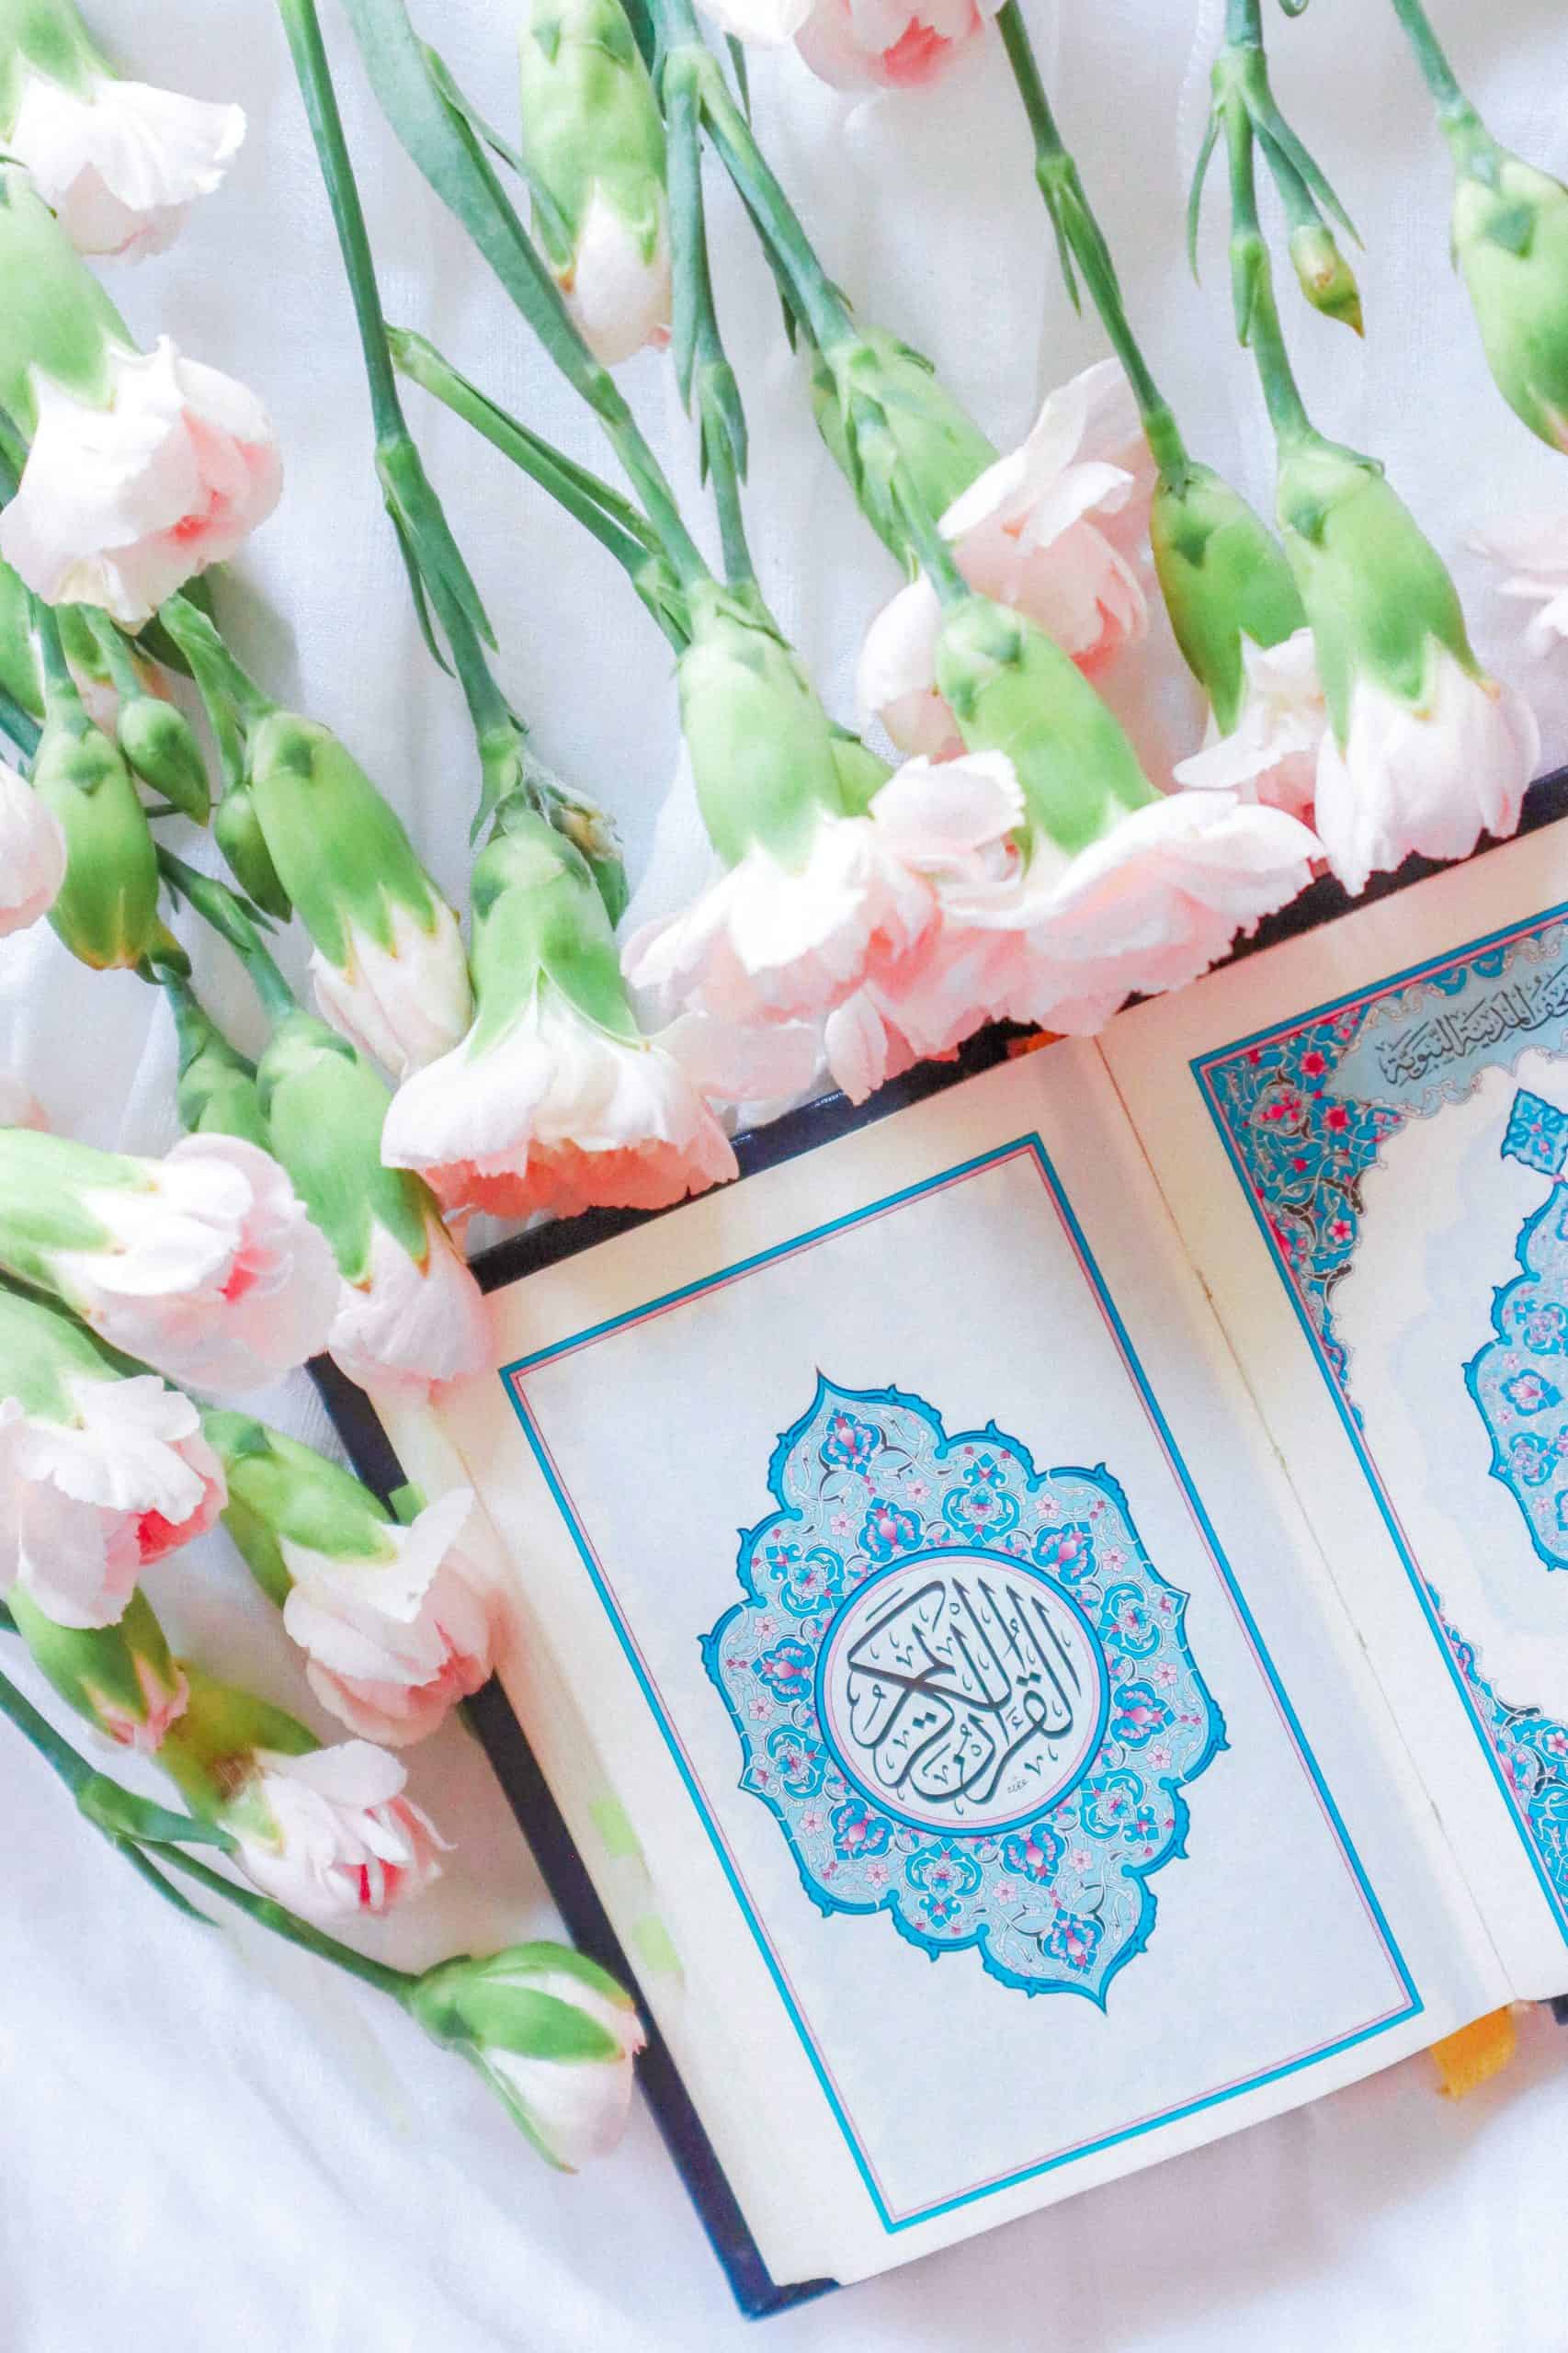 which surahs should i recite daily?